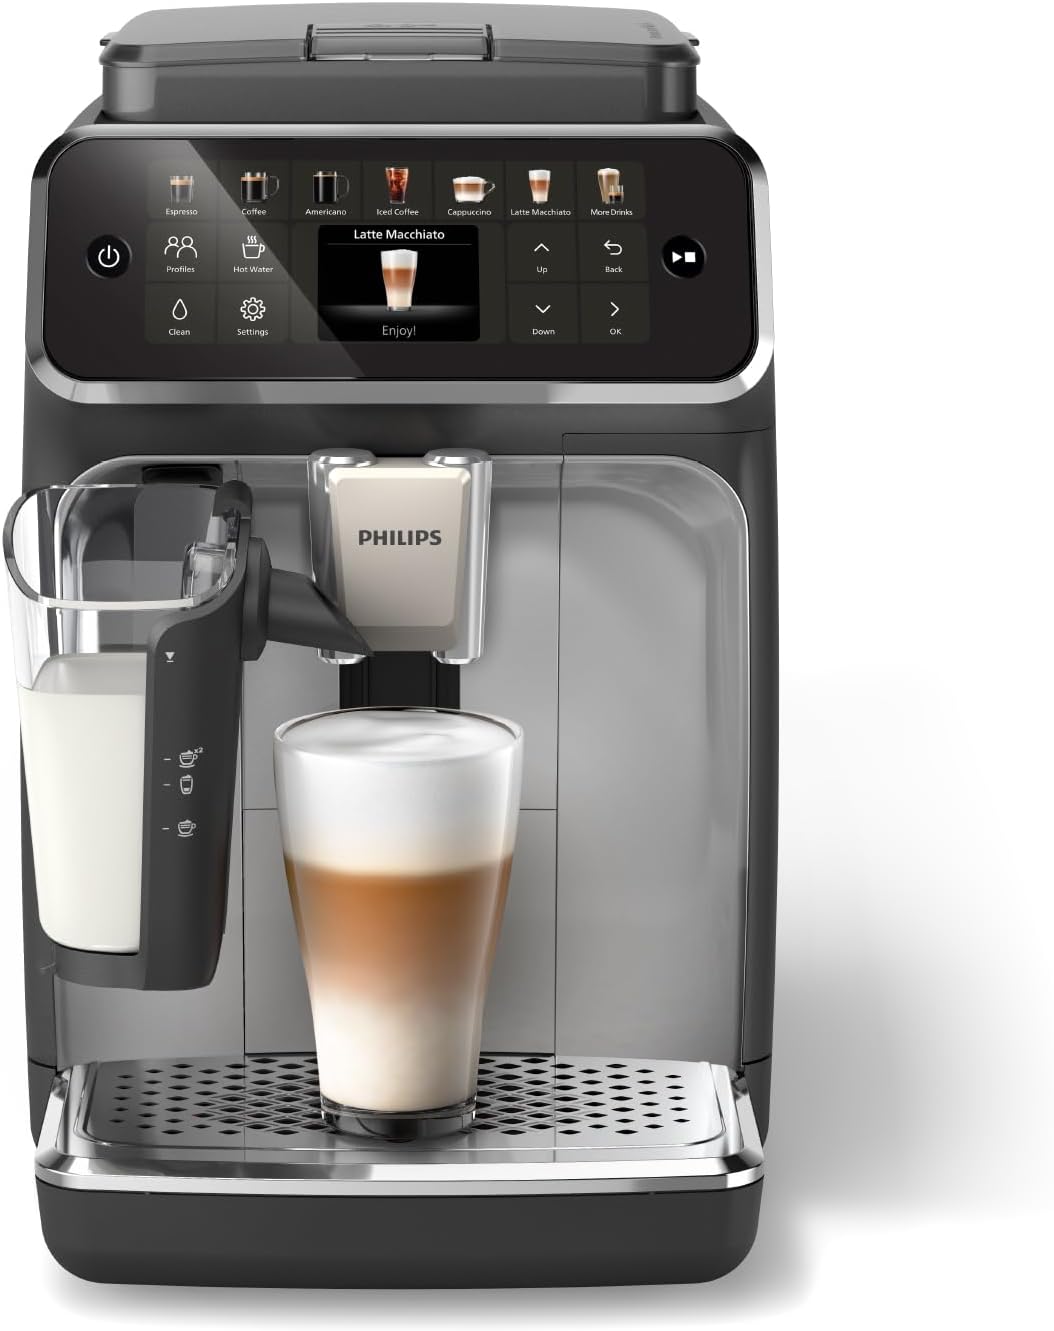 PHILIPS Series 4400 Fully Automatic LatteGo Espresso Machine